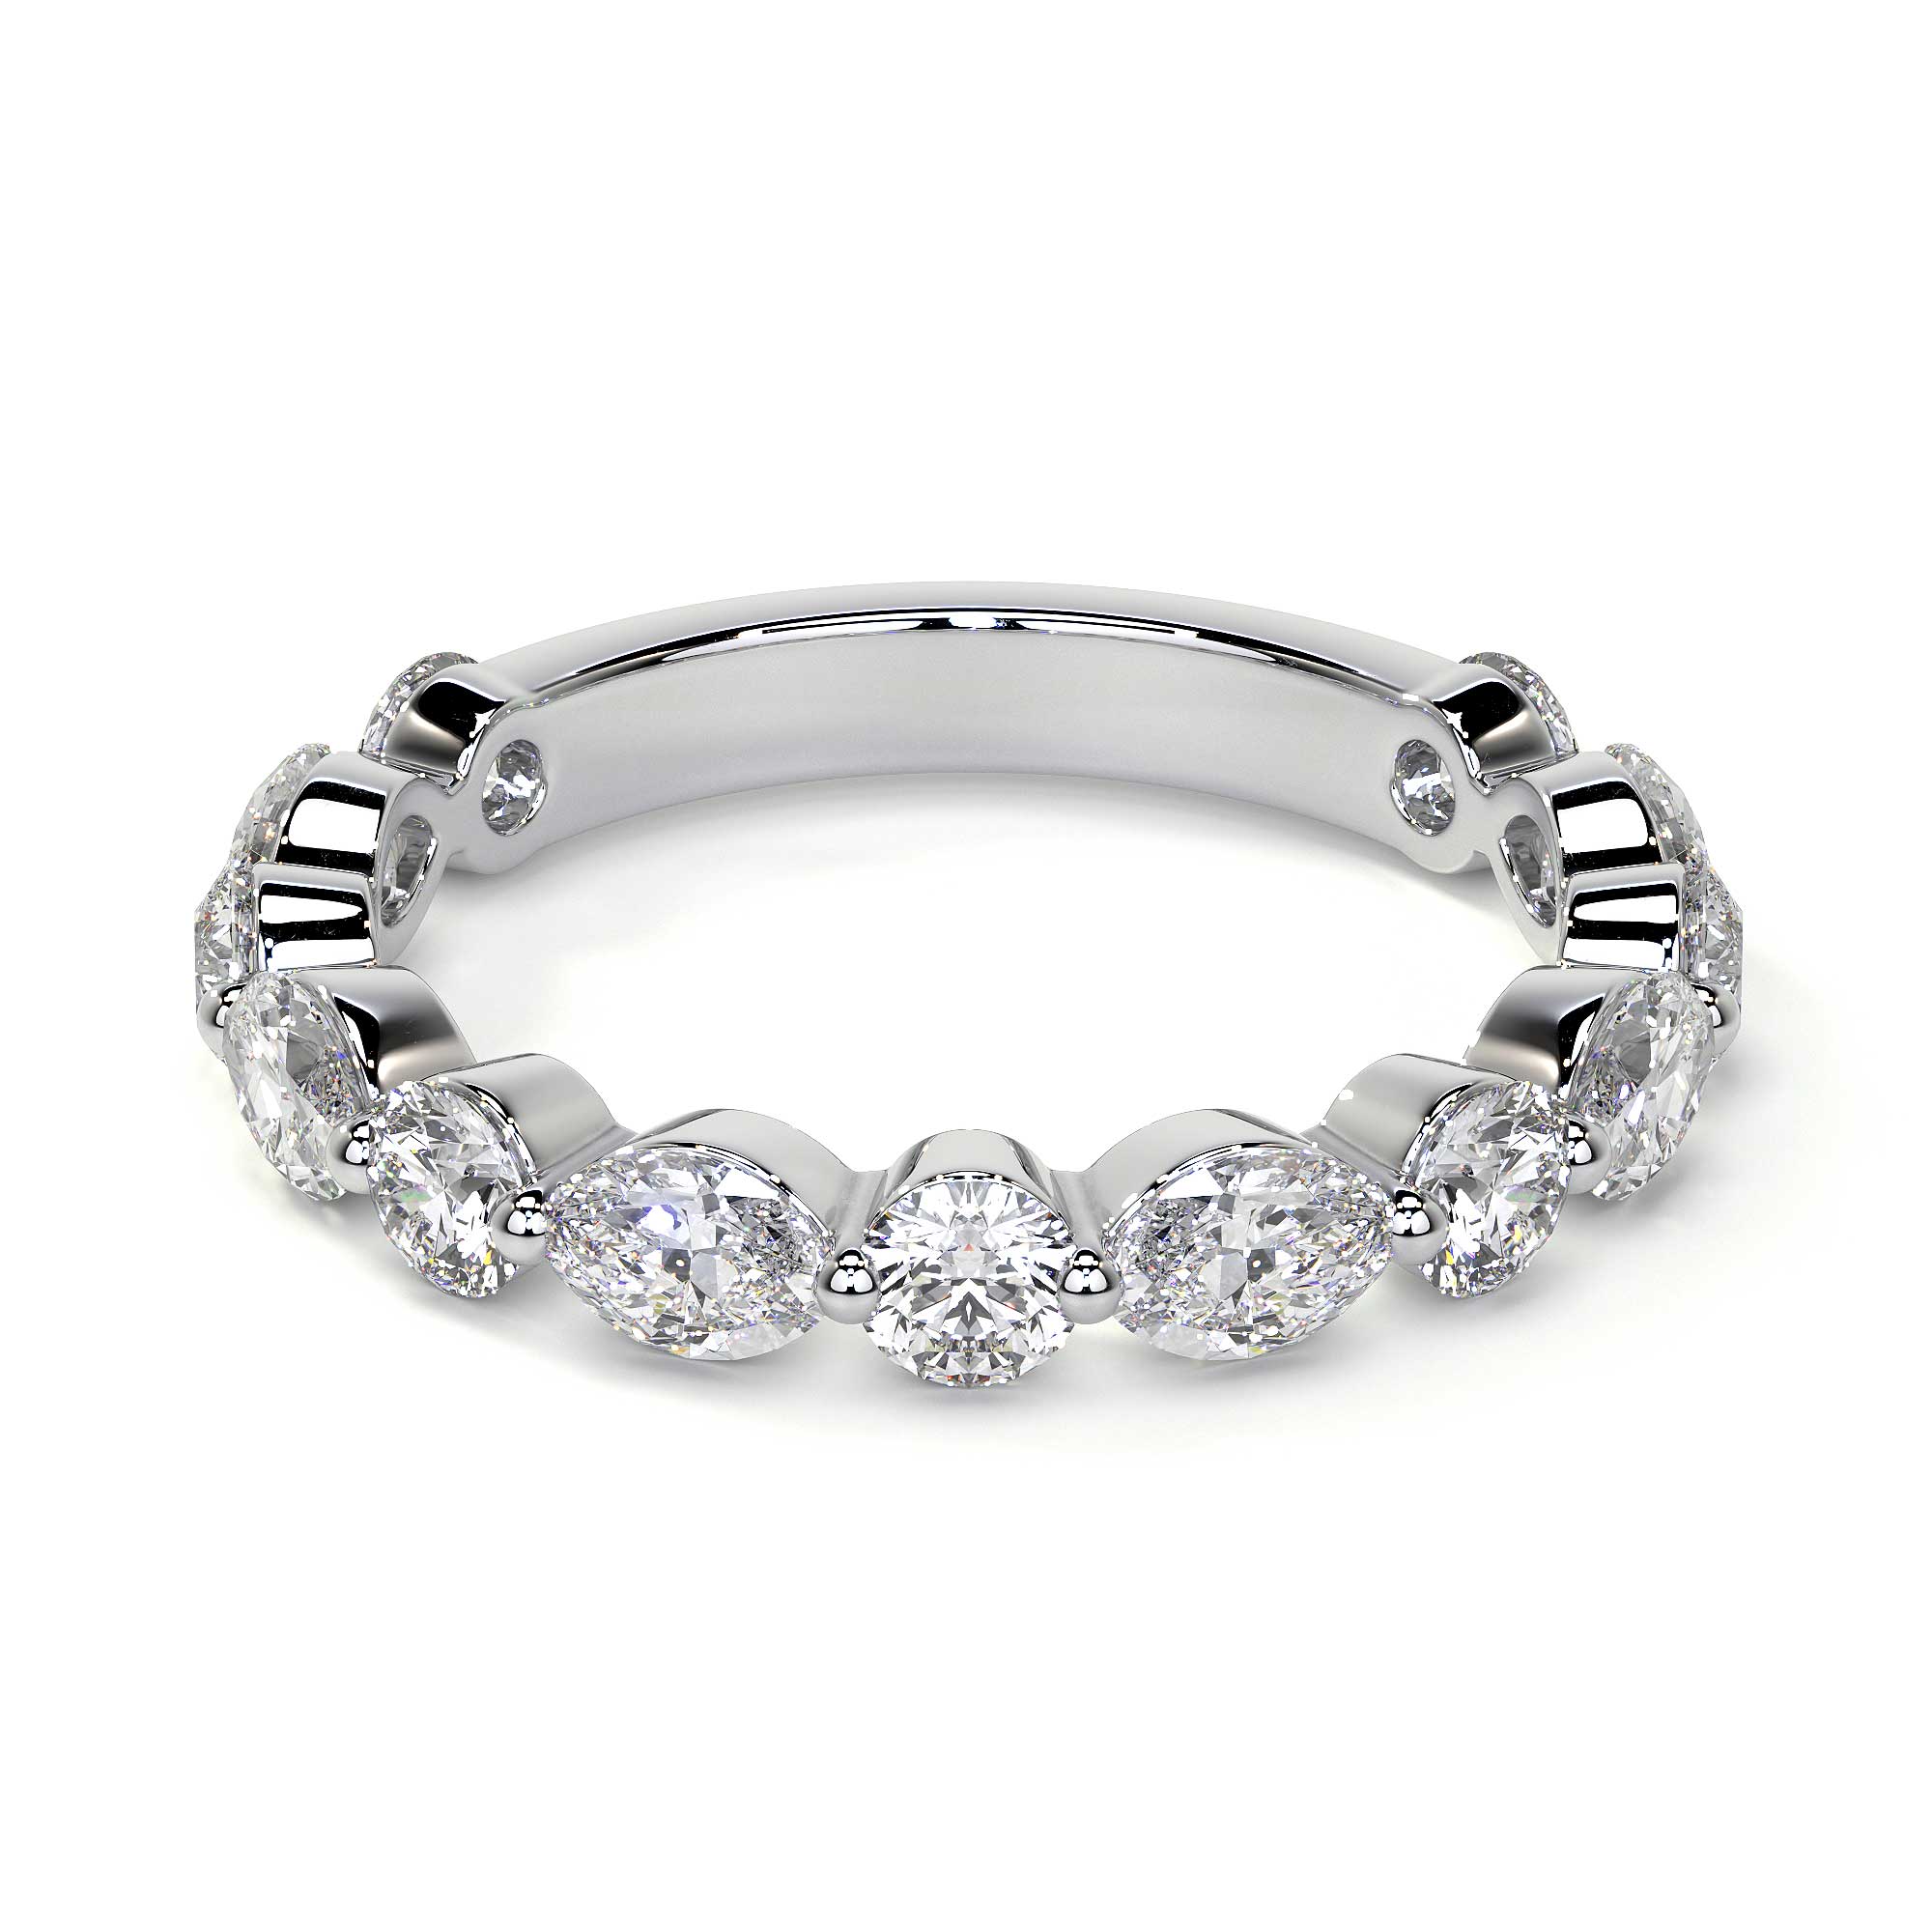 4 Ring - Rings - Leviev Diamonds